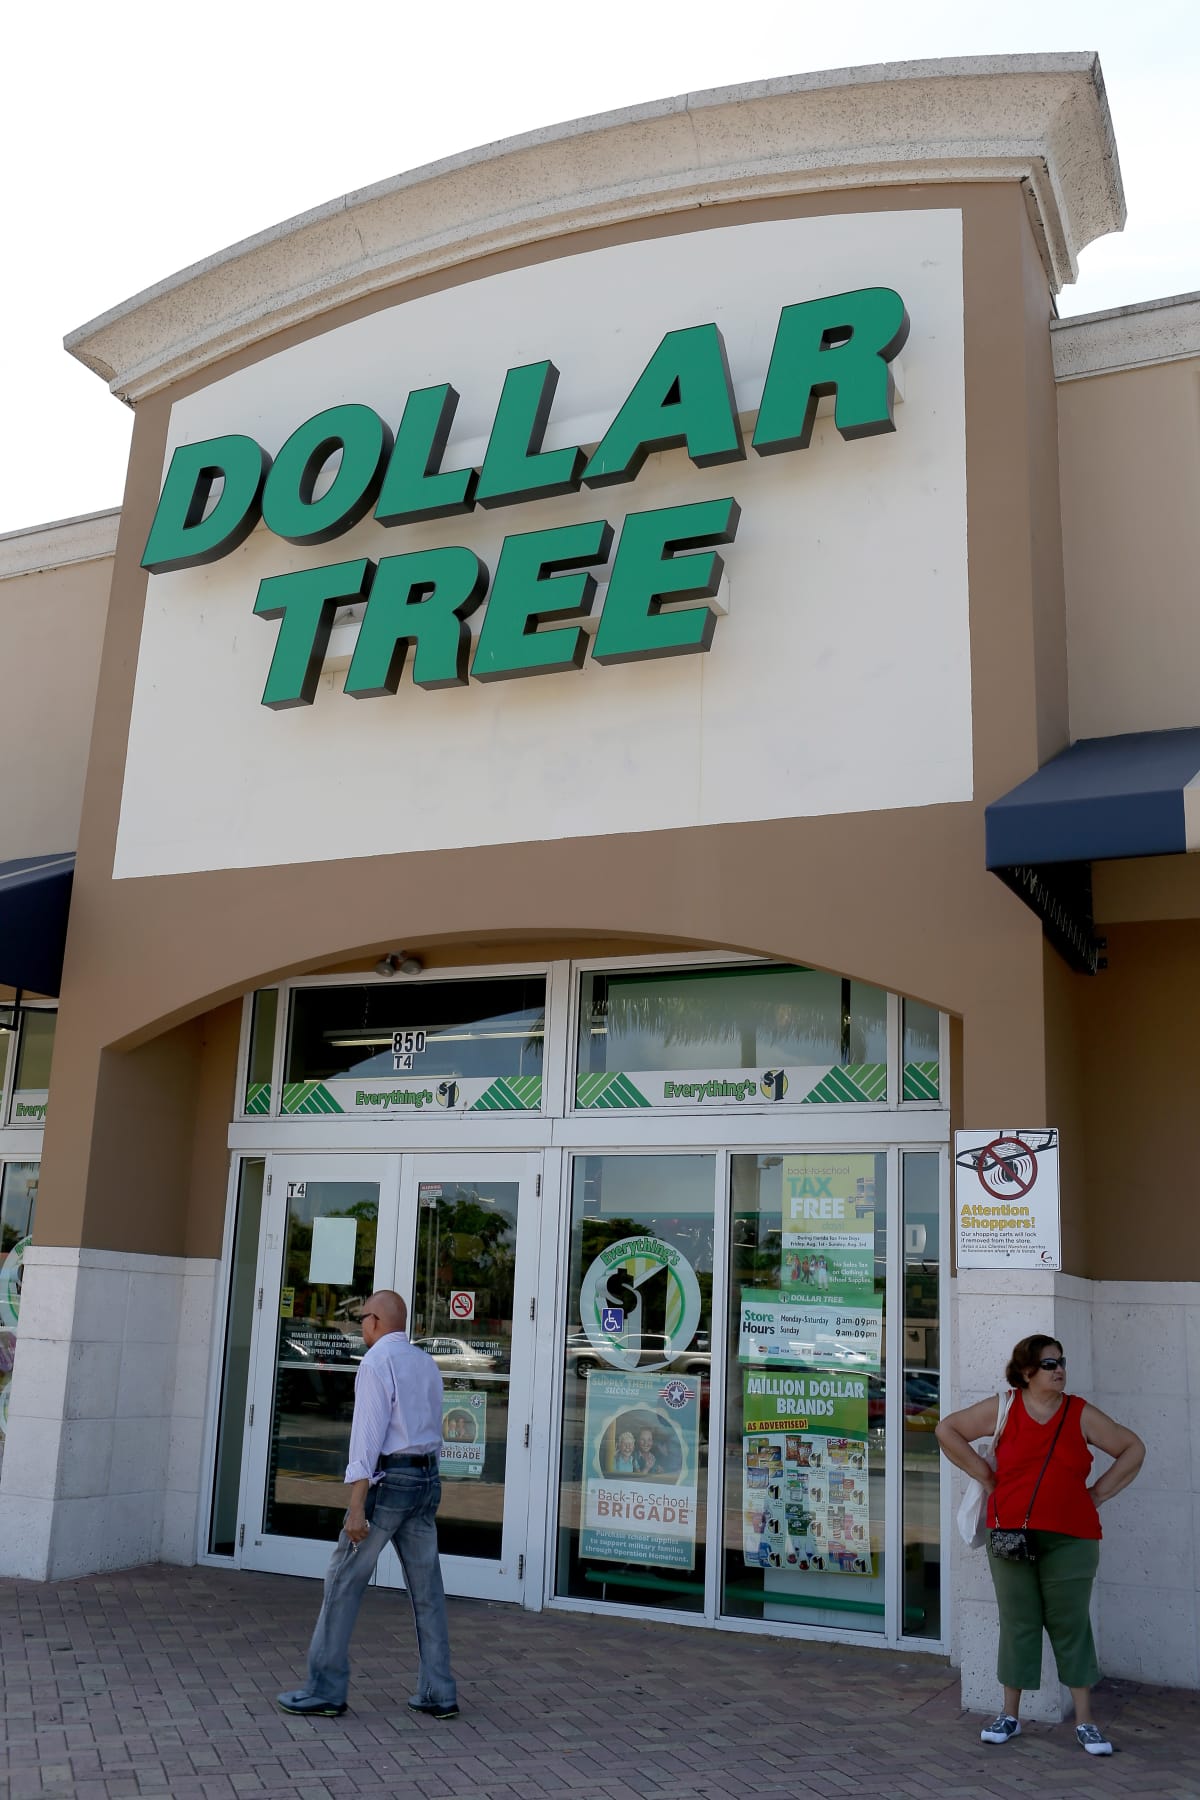 Dollar Tree sign on building